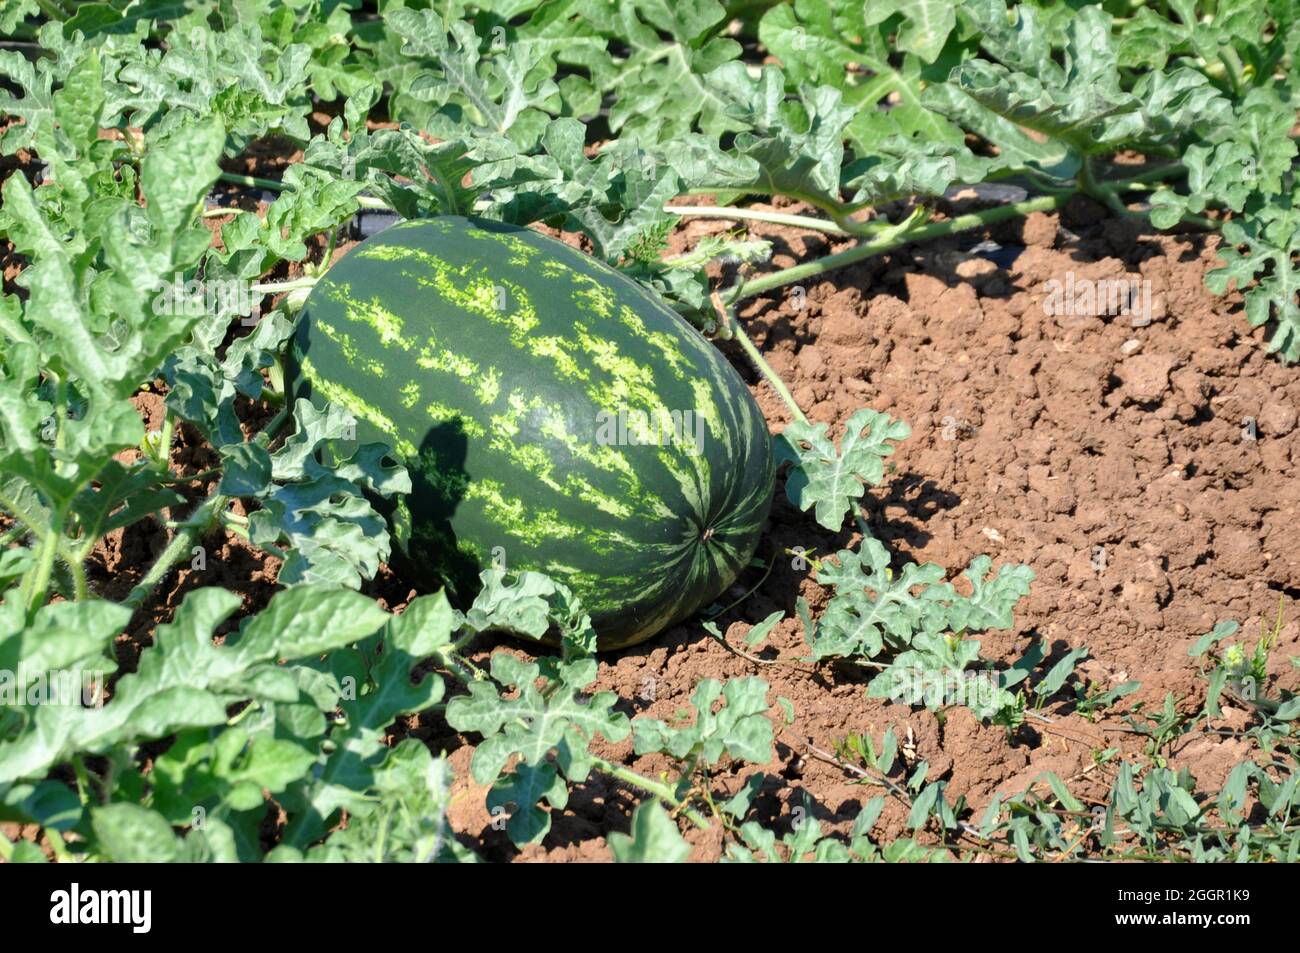 Watermelon-Citrullus lanatus- in garden Stock Photo